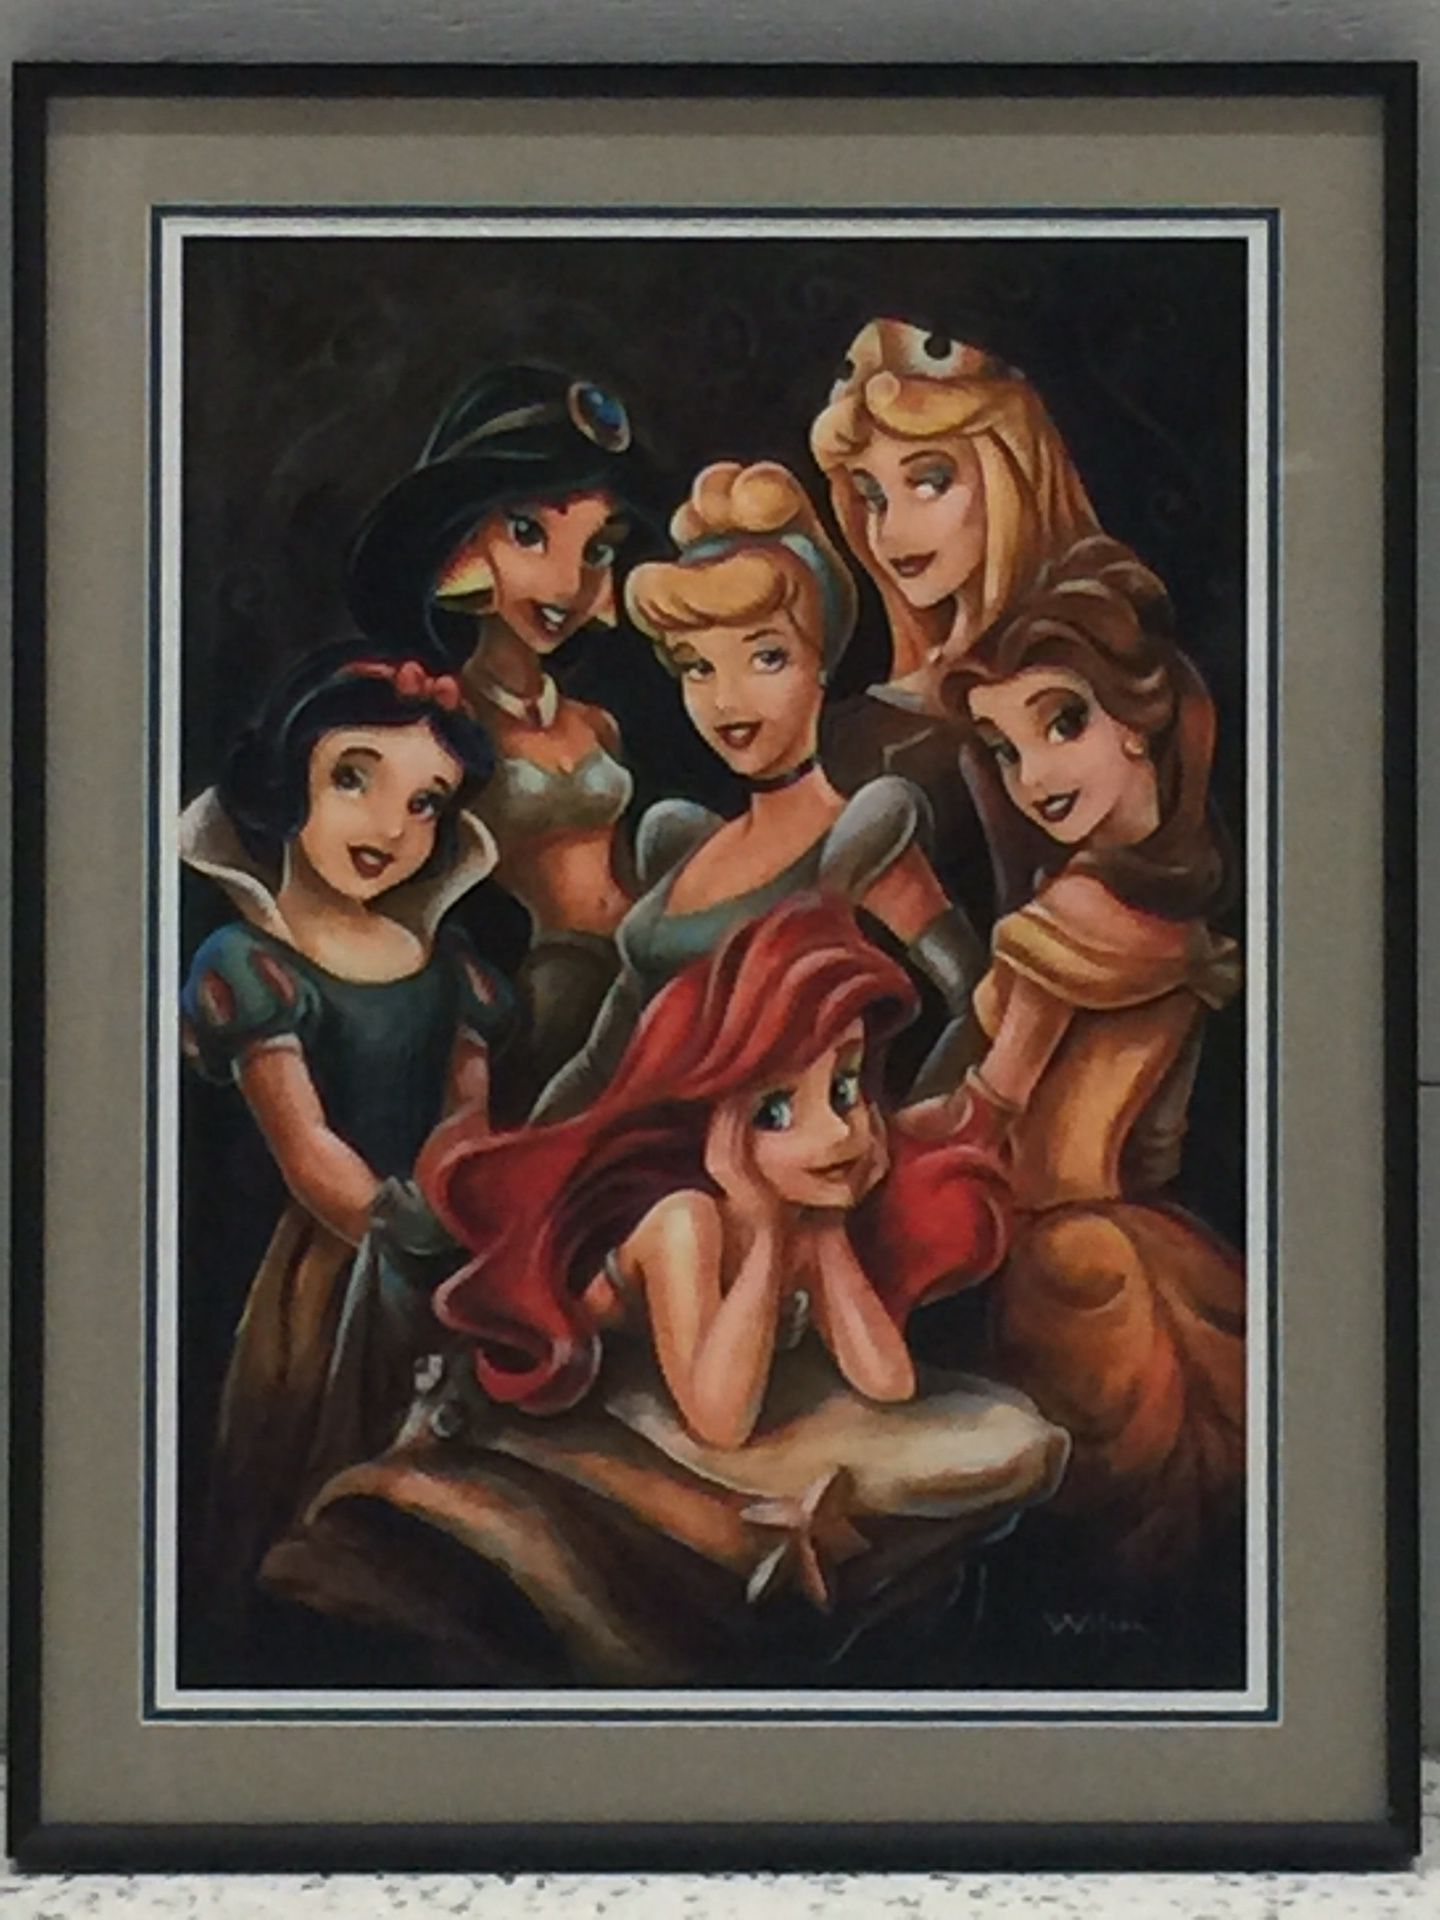 Disney Print “Princess Gathering” by Wilson